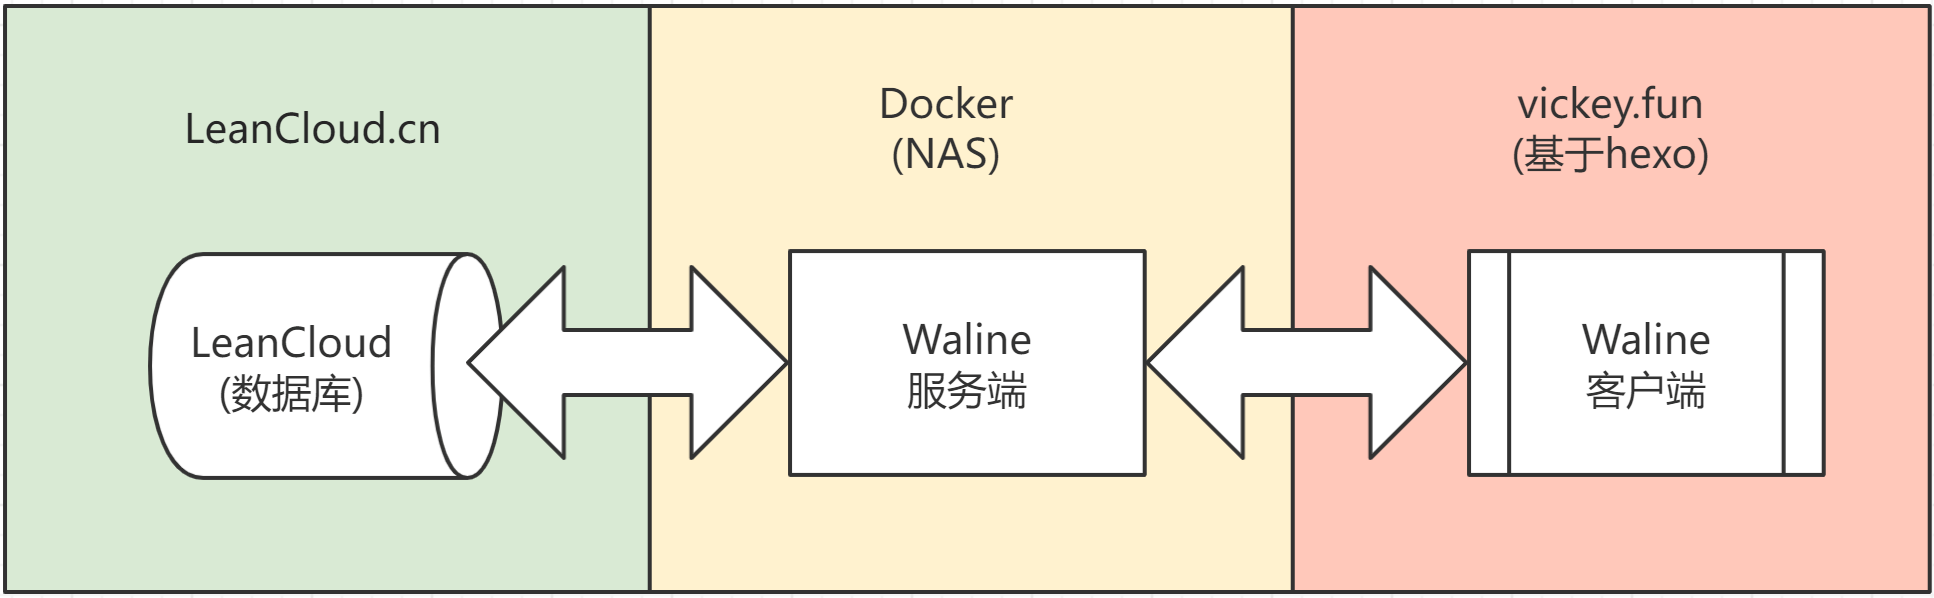 Waline 评价系统架构